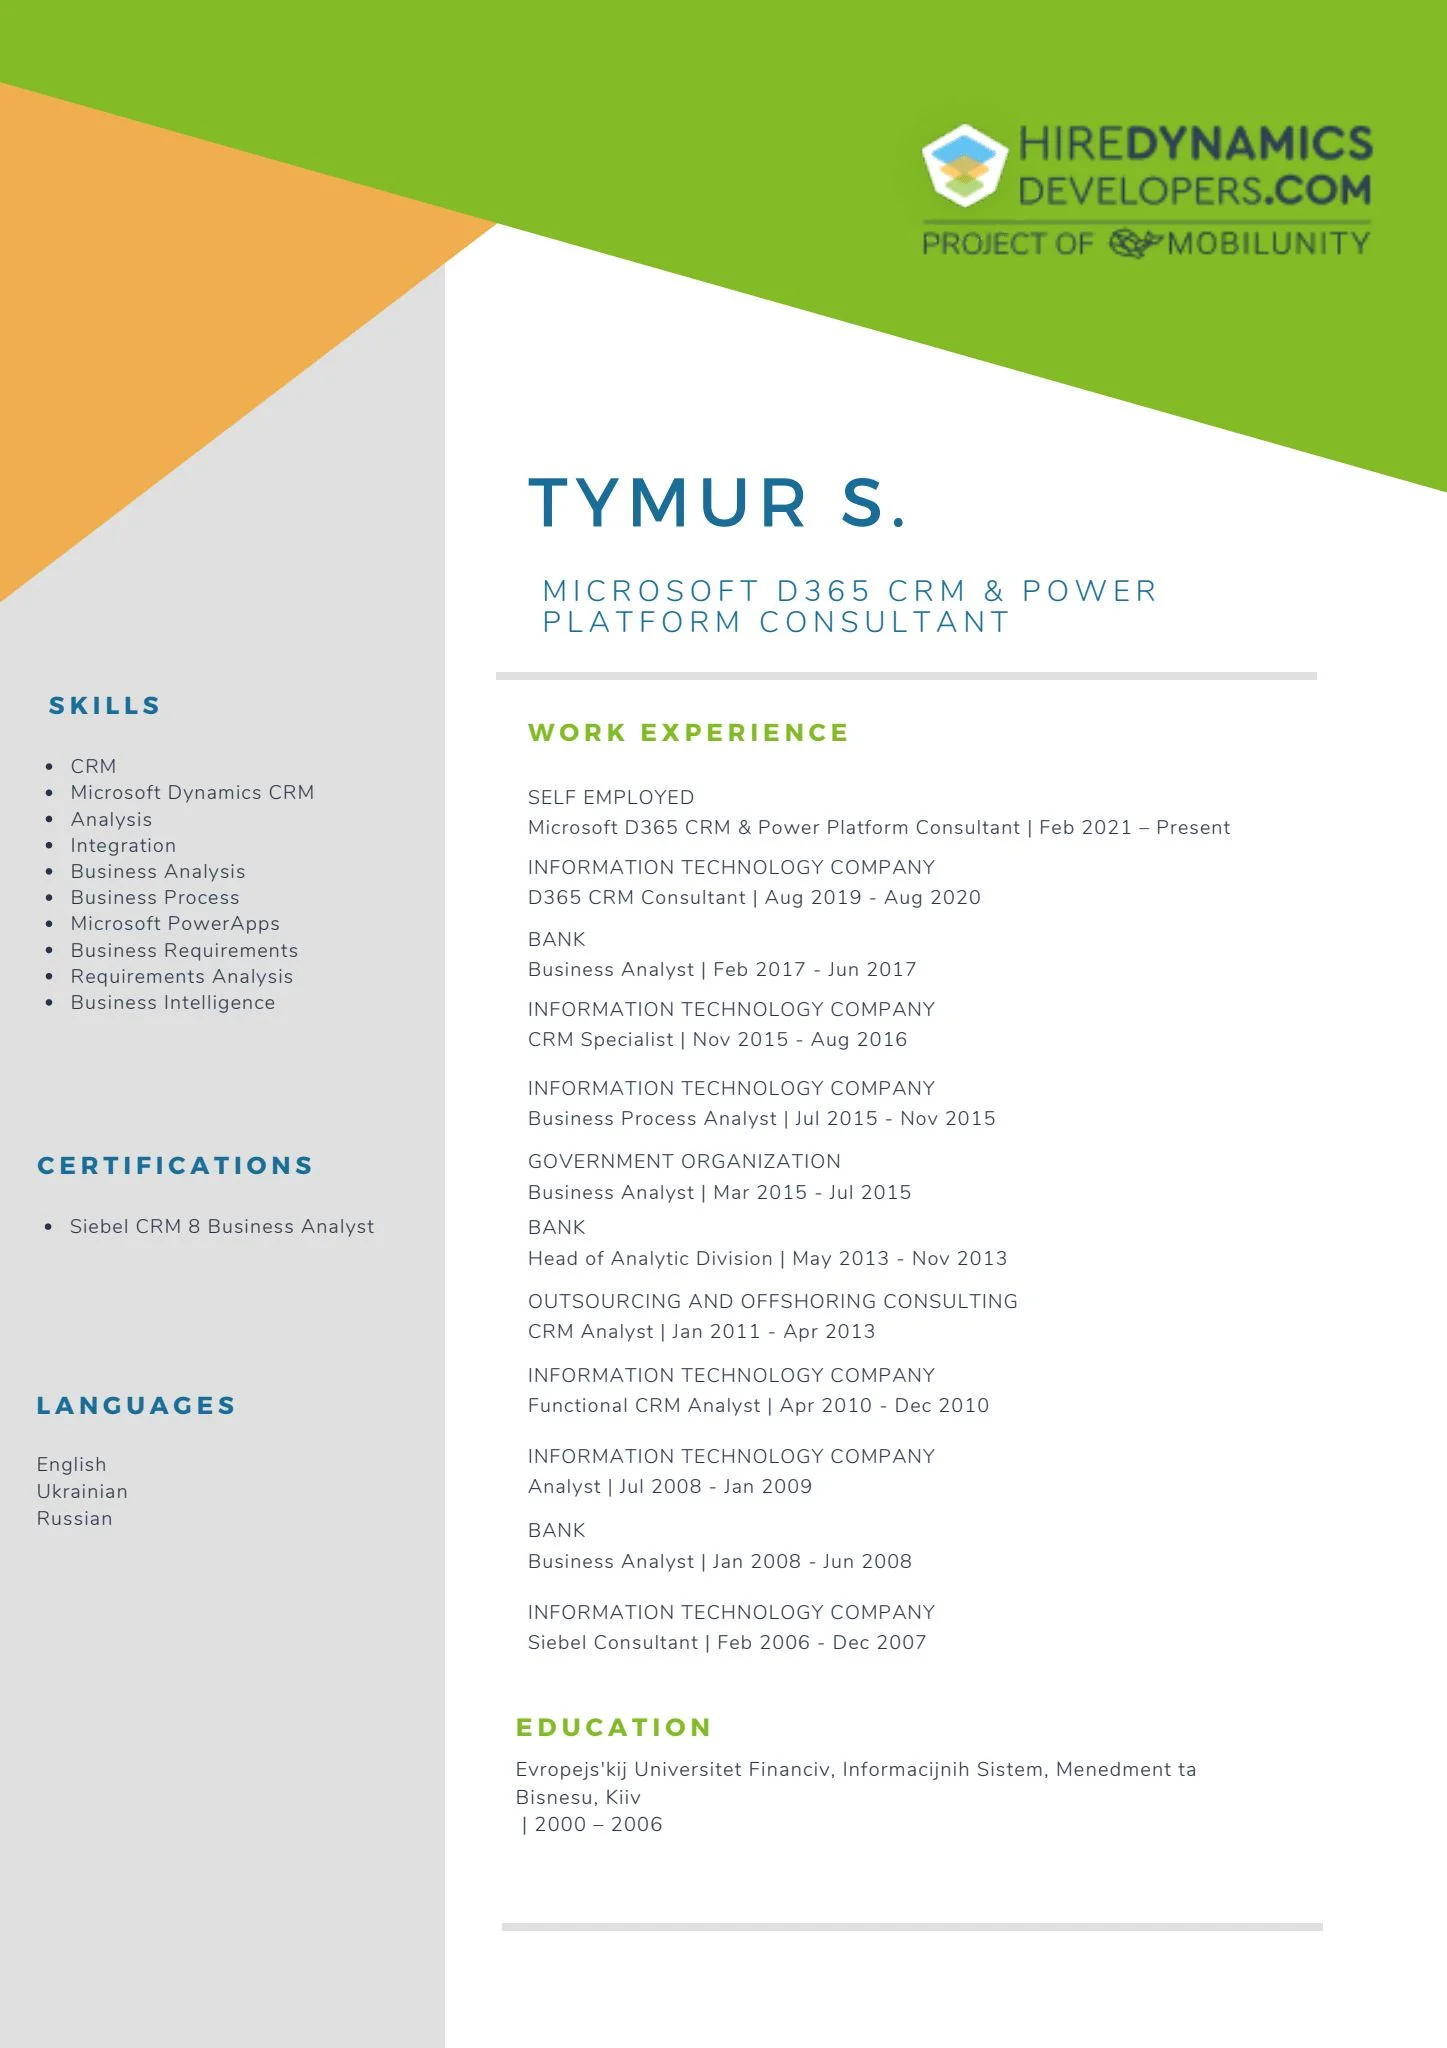 Tymur S. – Microsoft D365 CRM and Power Platform Specialist